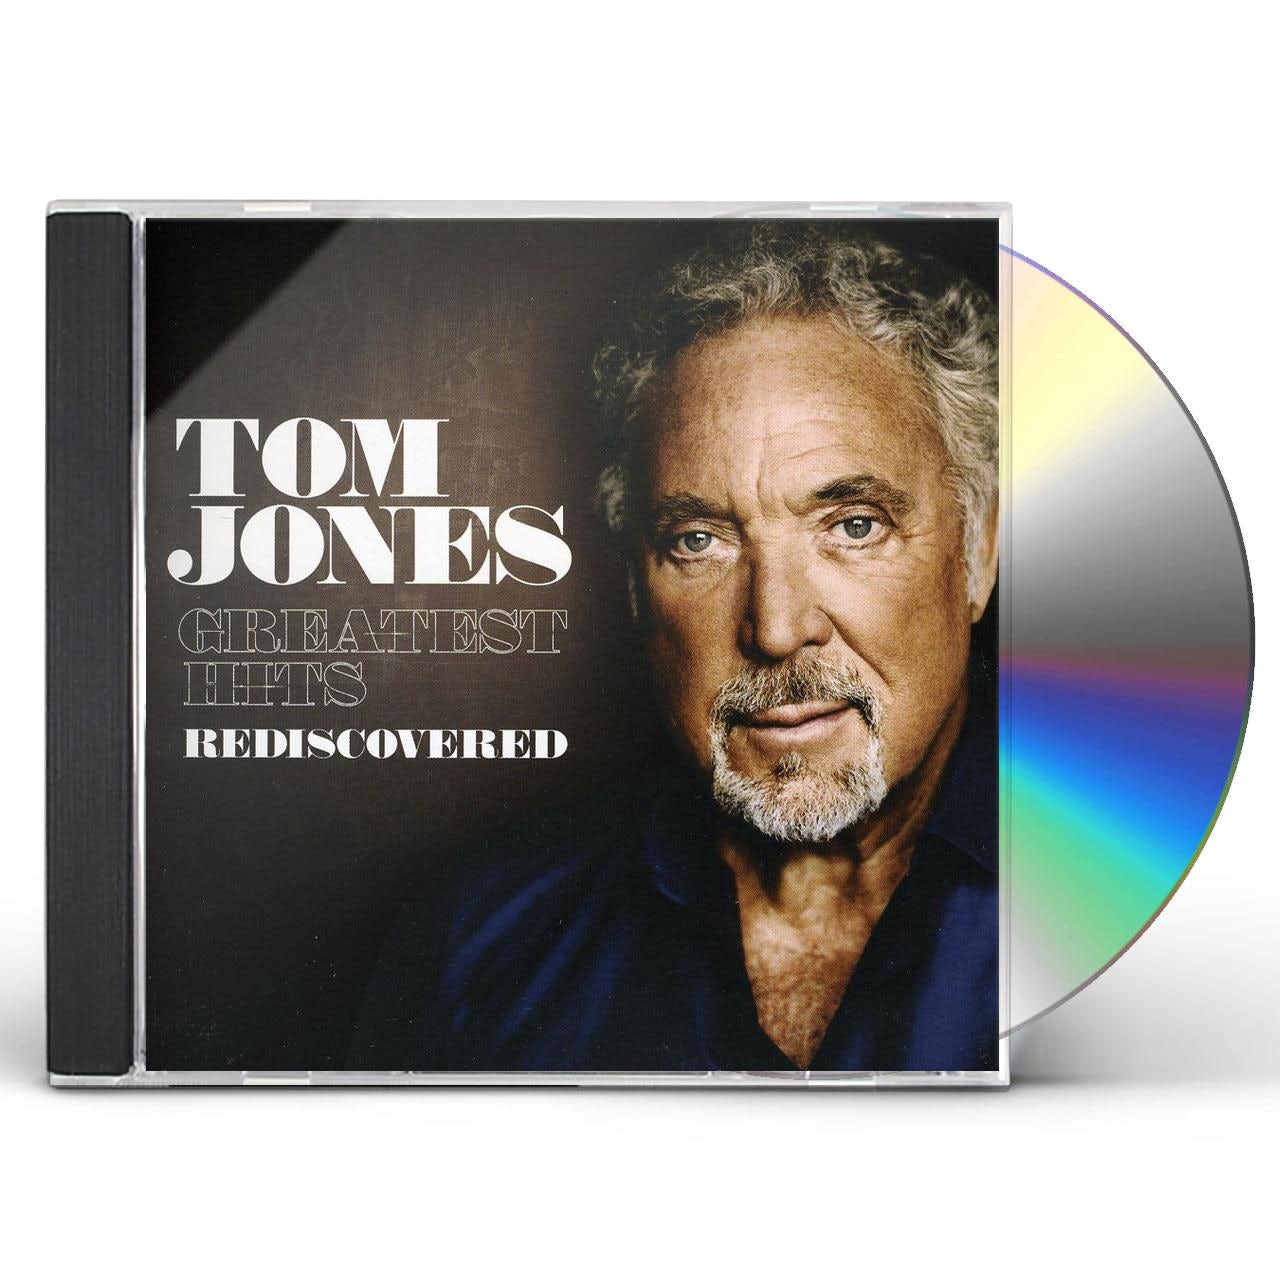 Tom Jones, Greatest Hits: Rediscovered, CD